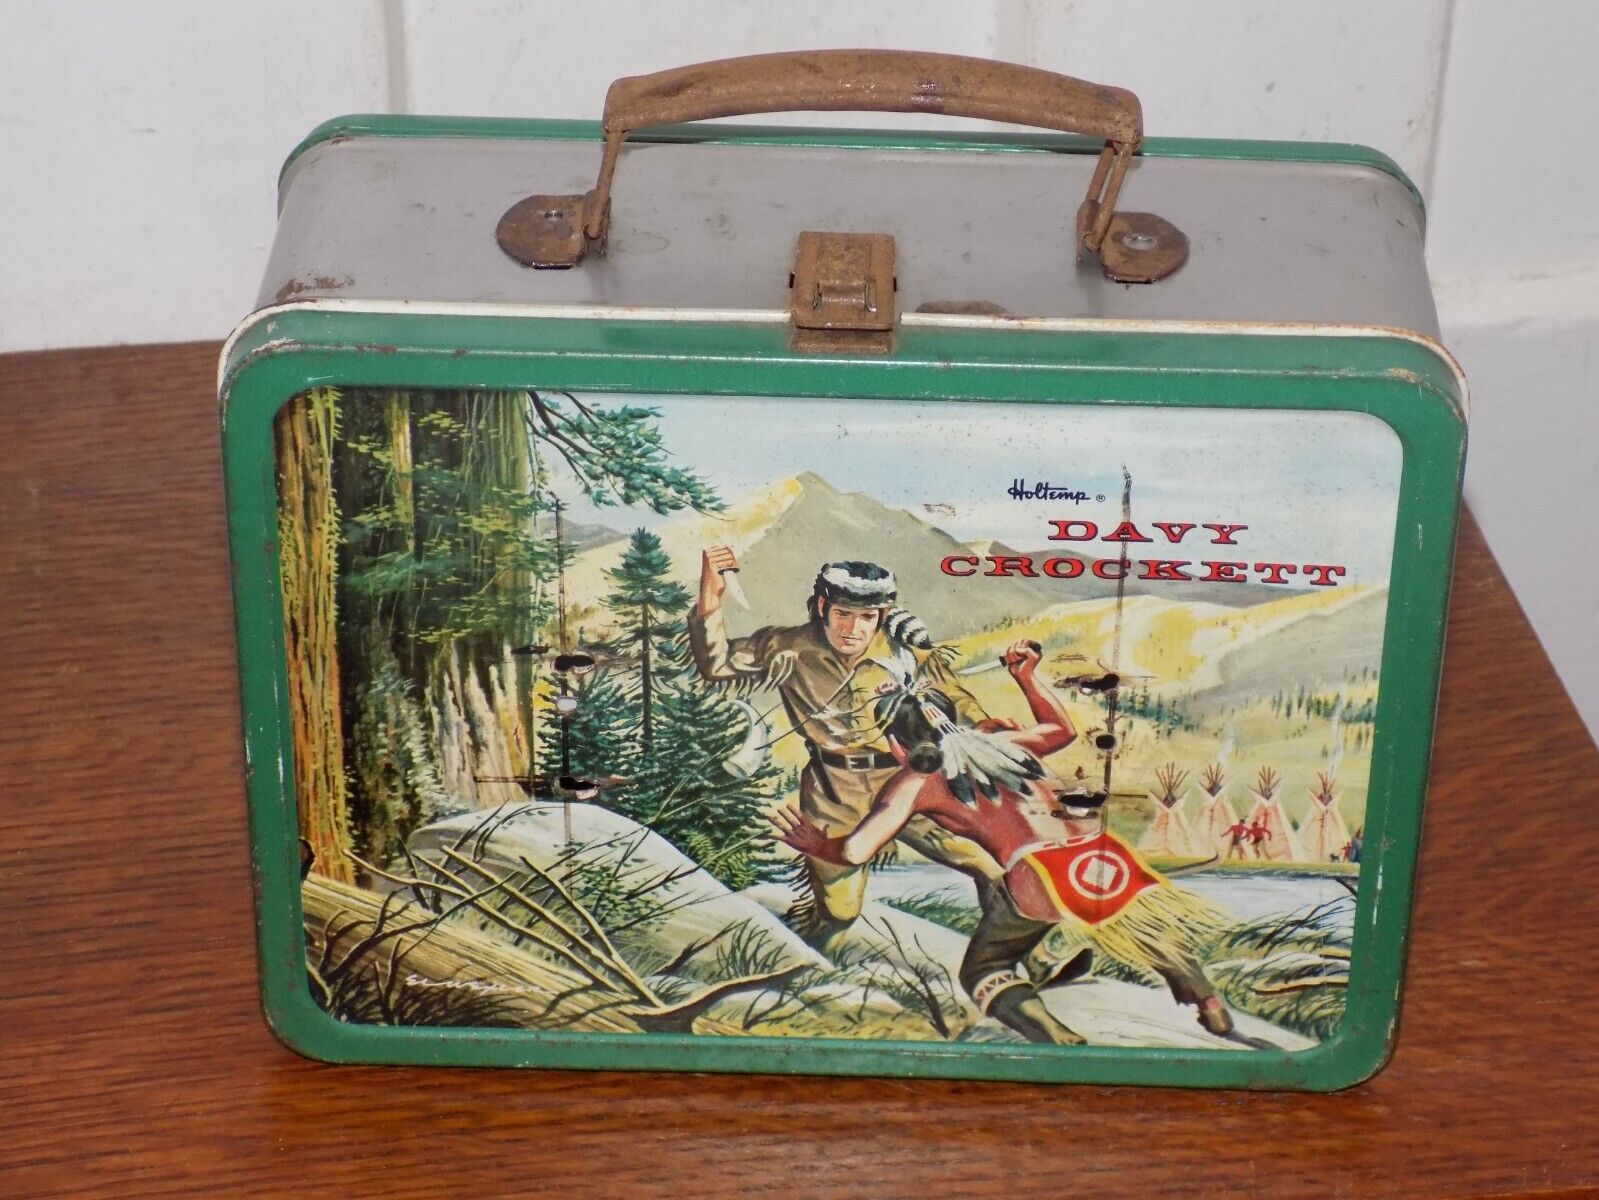 Vintage Holtemp Davy Crockett Metal Lunchbox